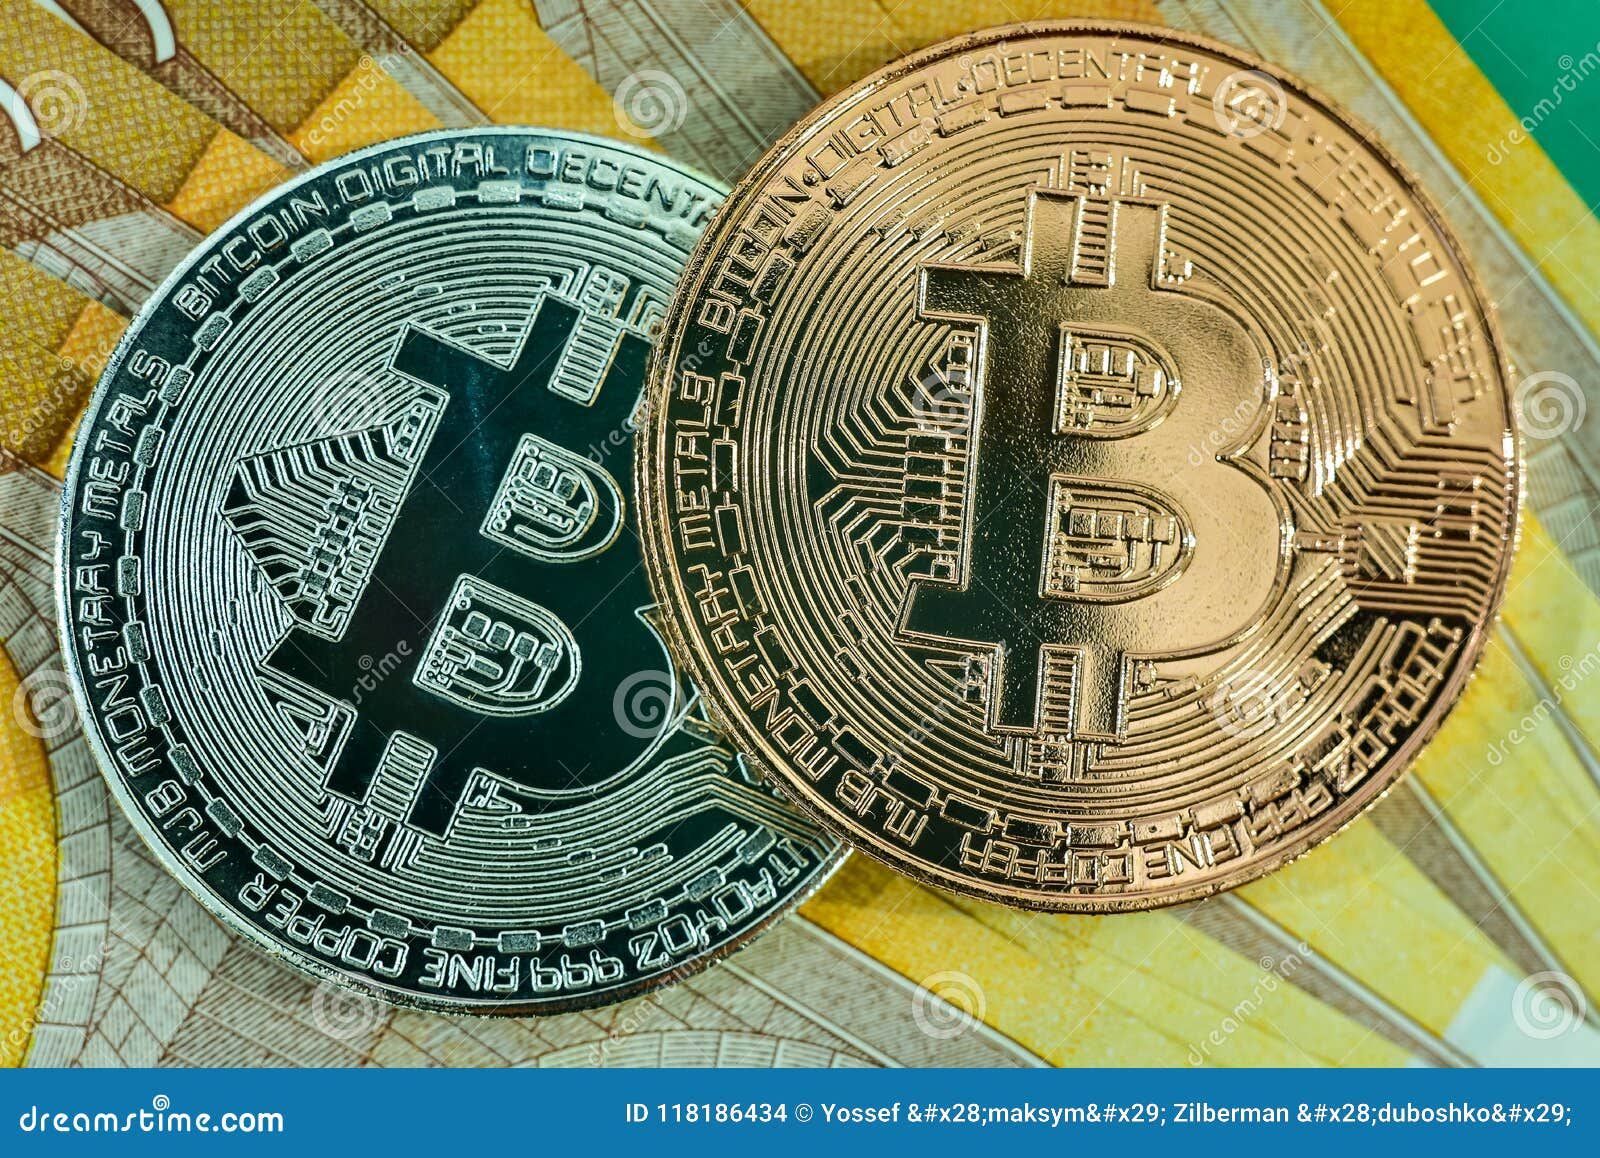 20 bitcoins to euro